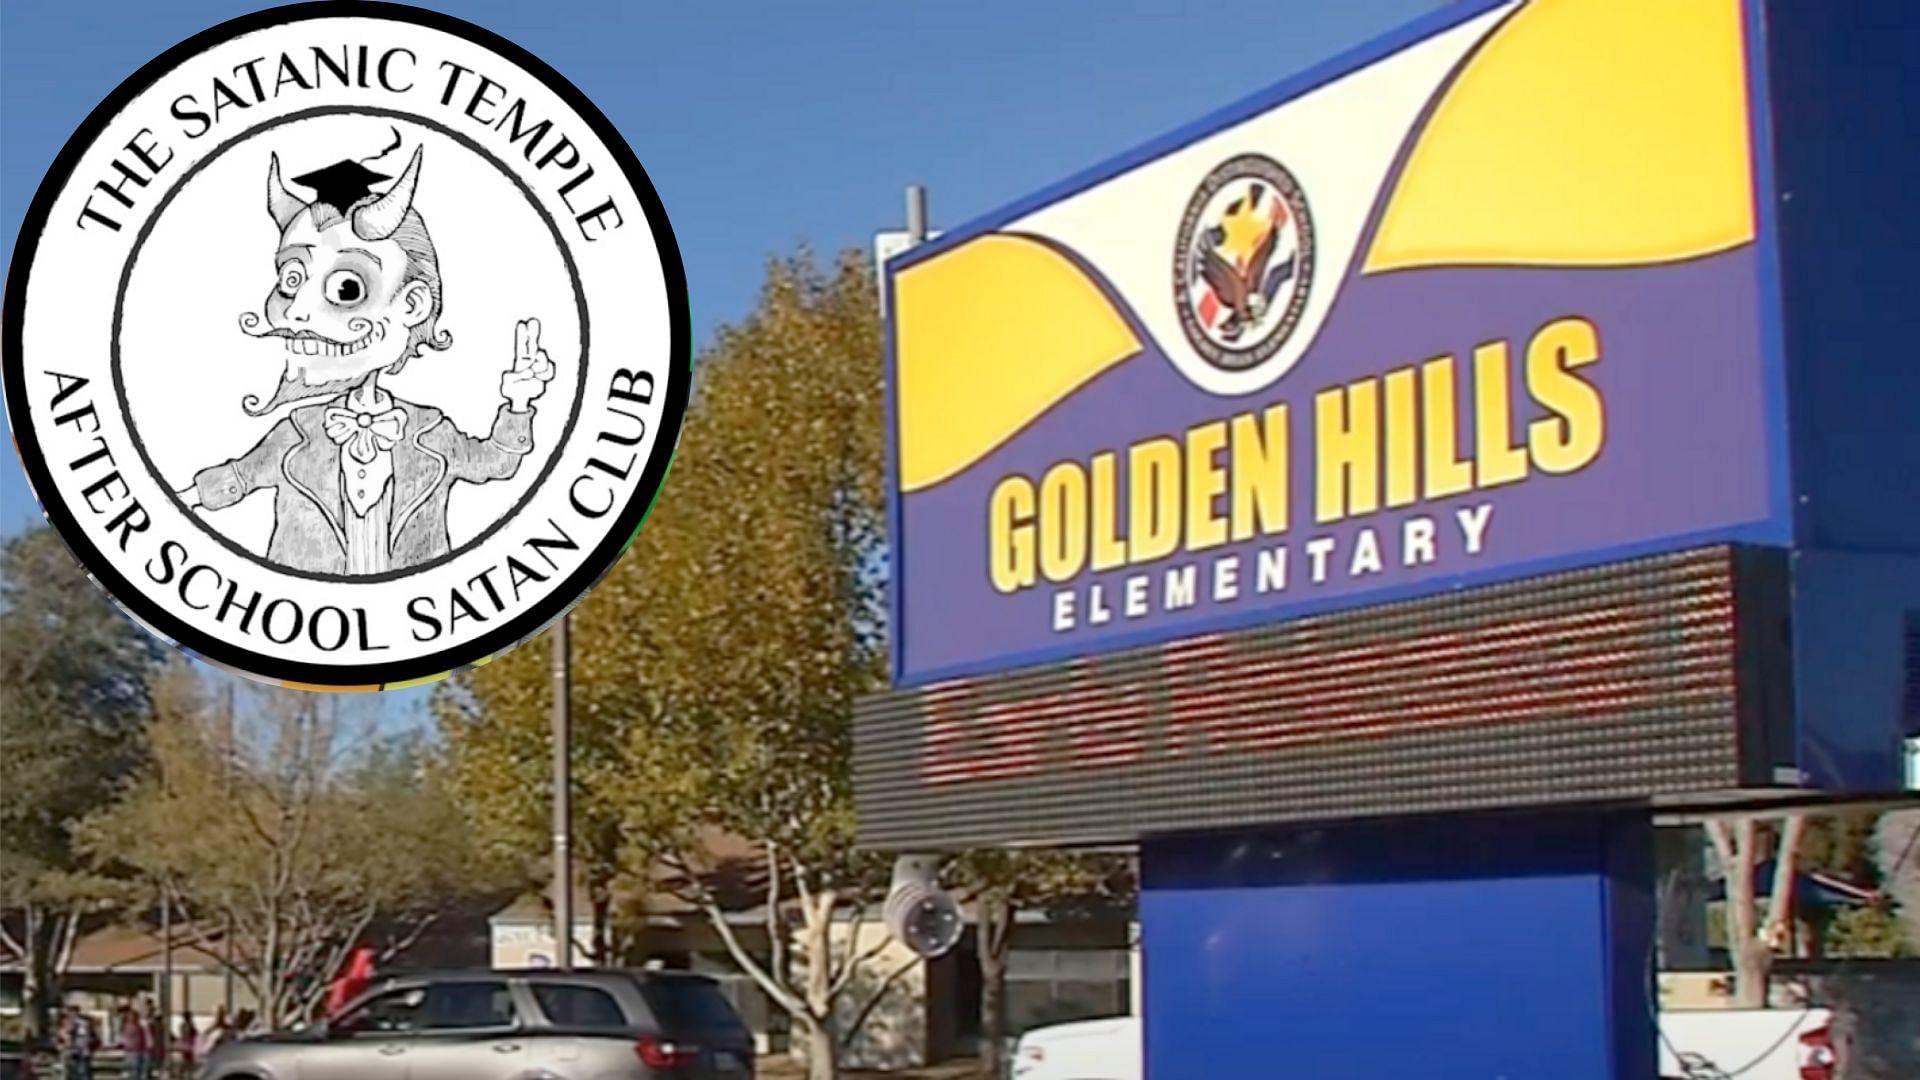 Californian elementary school to open satan club (image via goldenhillselementary.com and satanictemple.com)